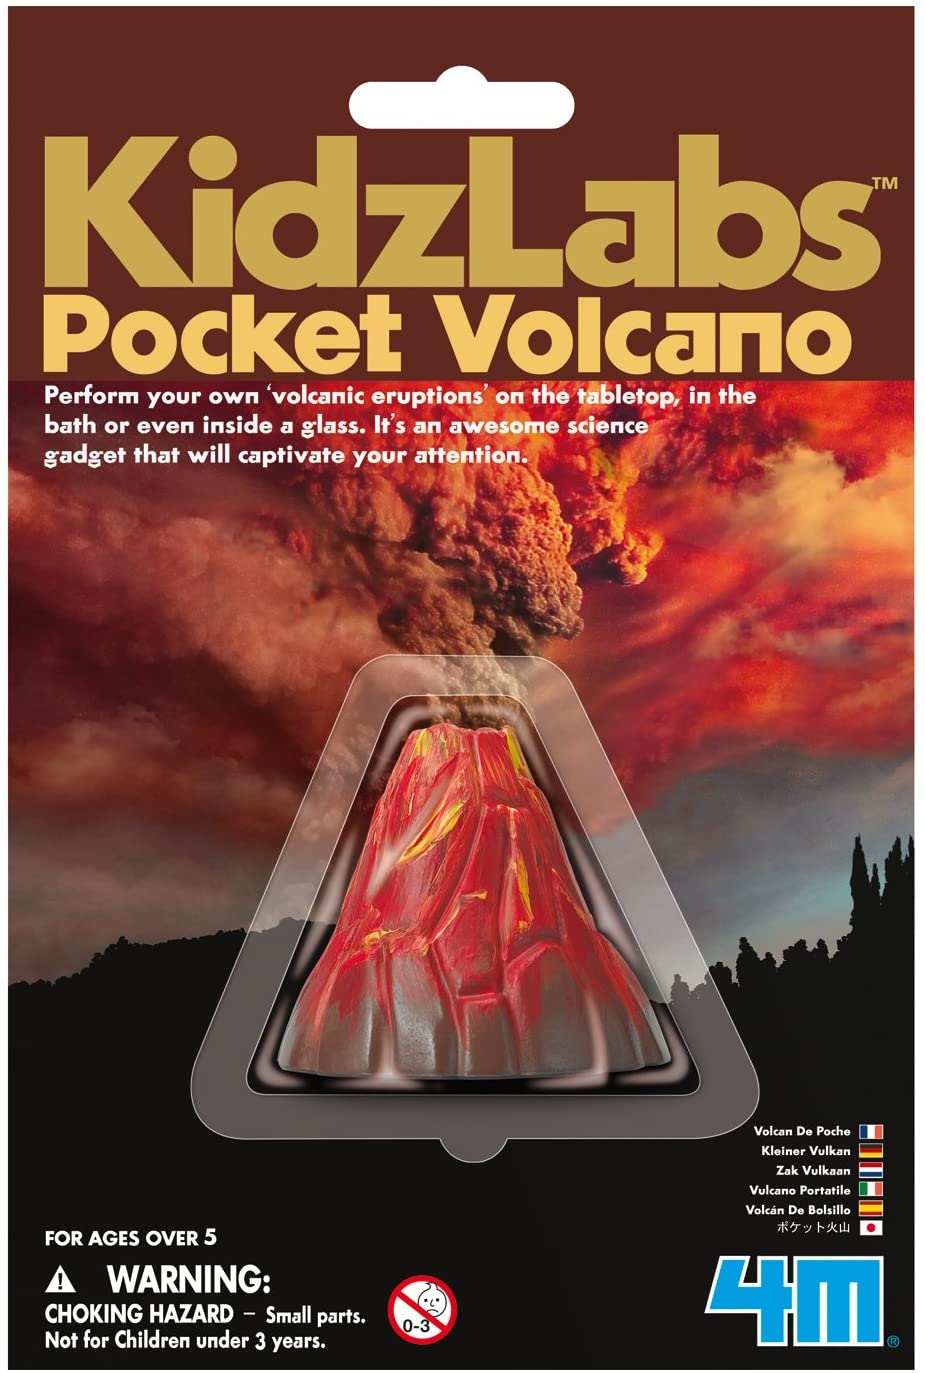 kidzlabs pocket volcano 4m eruptions science gadget captivating classic attention amaze fascinating baking soda vinegar instructions process safe ages 5+ 